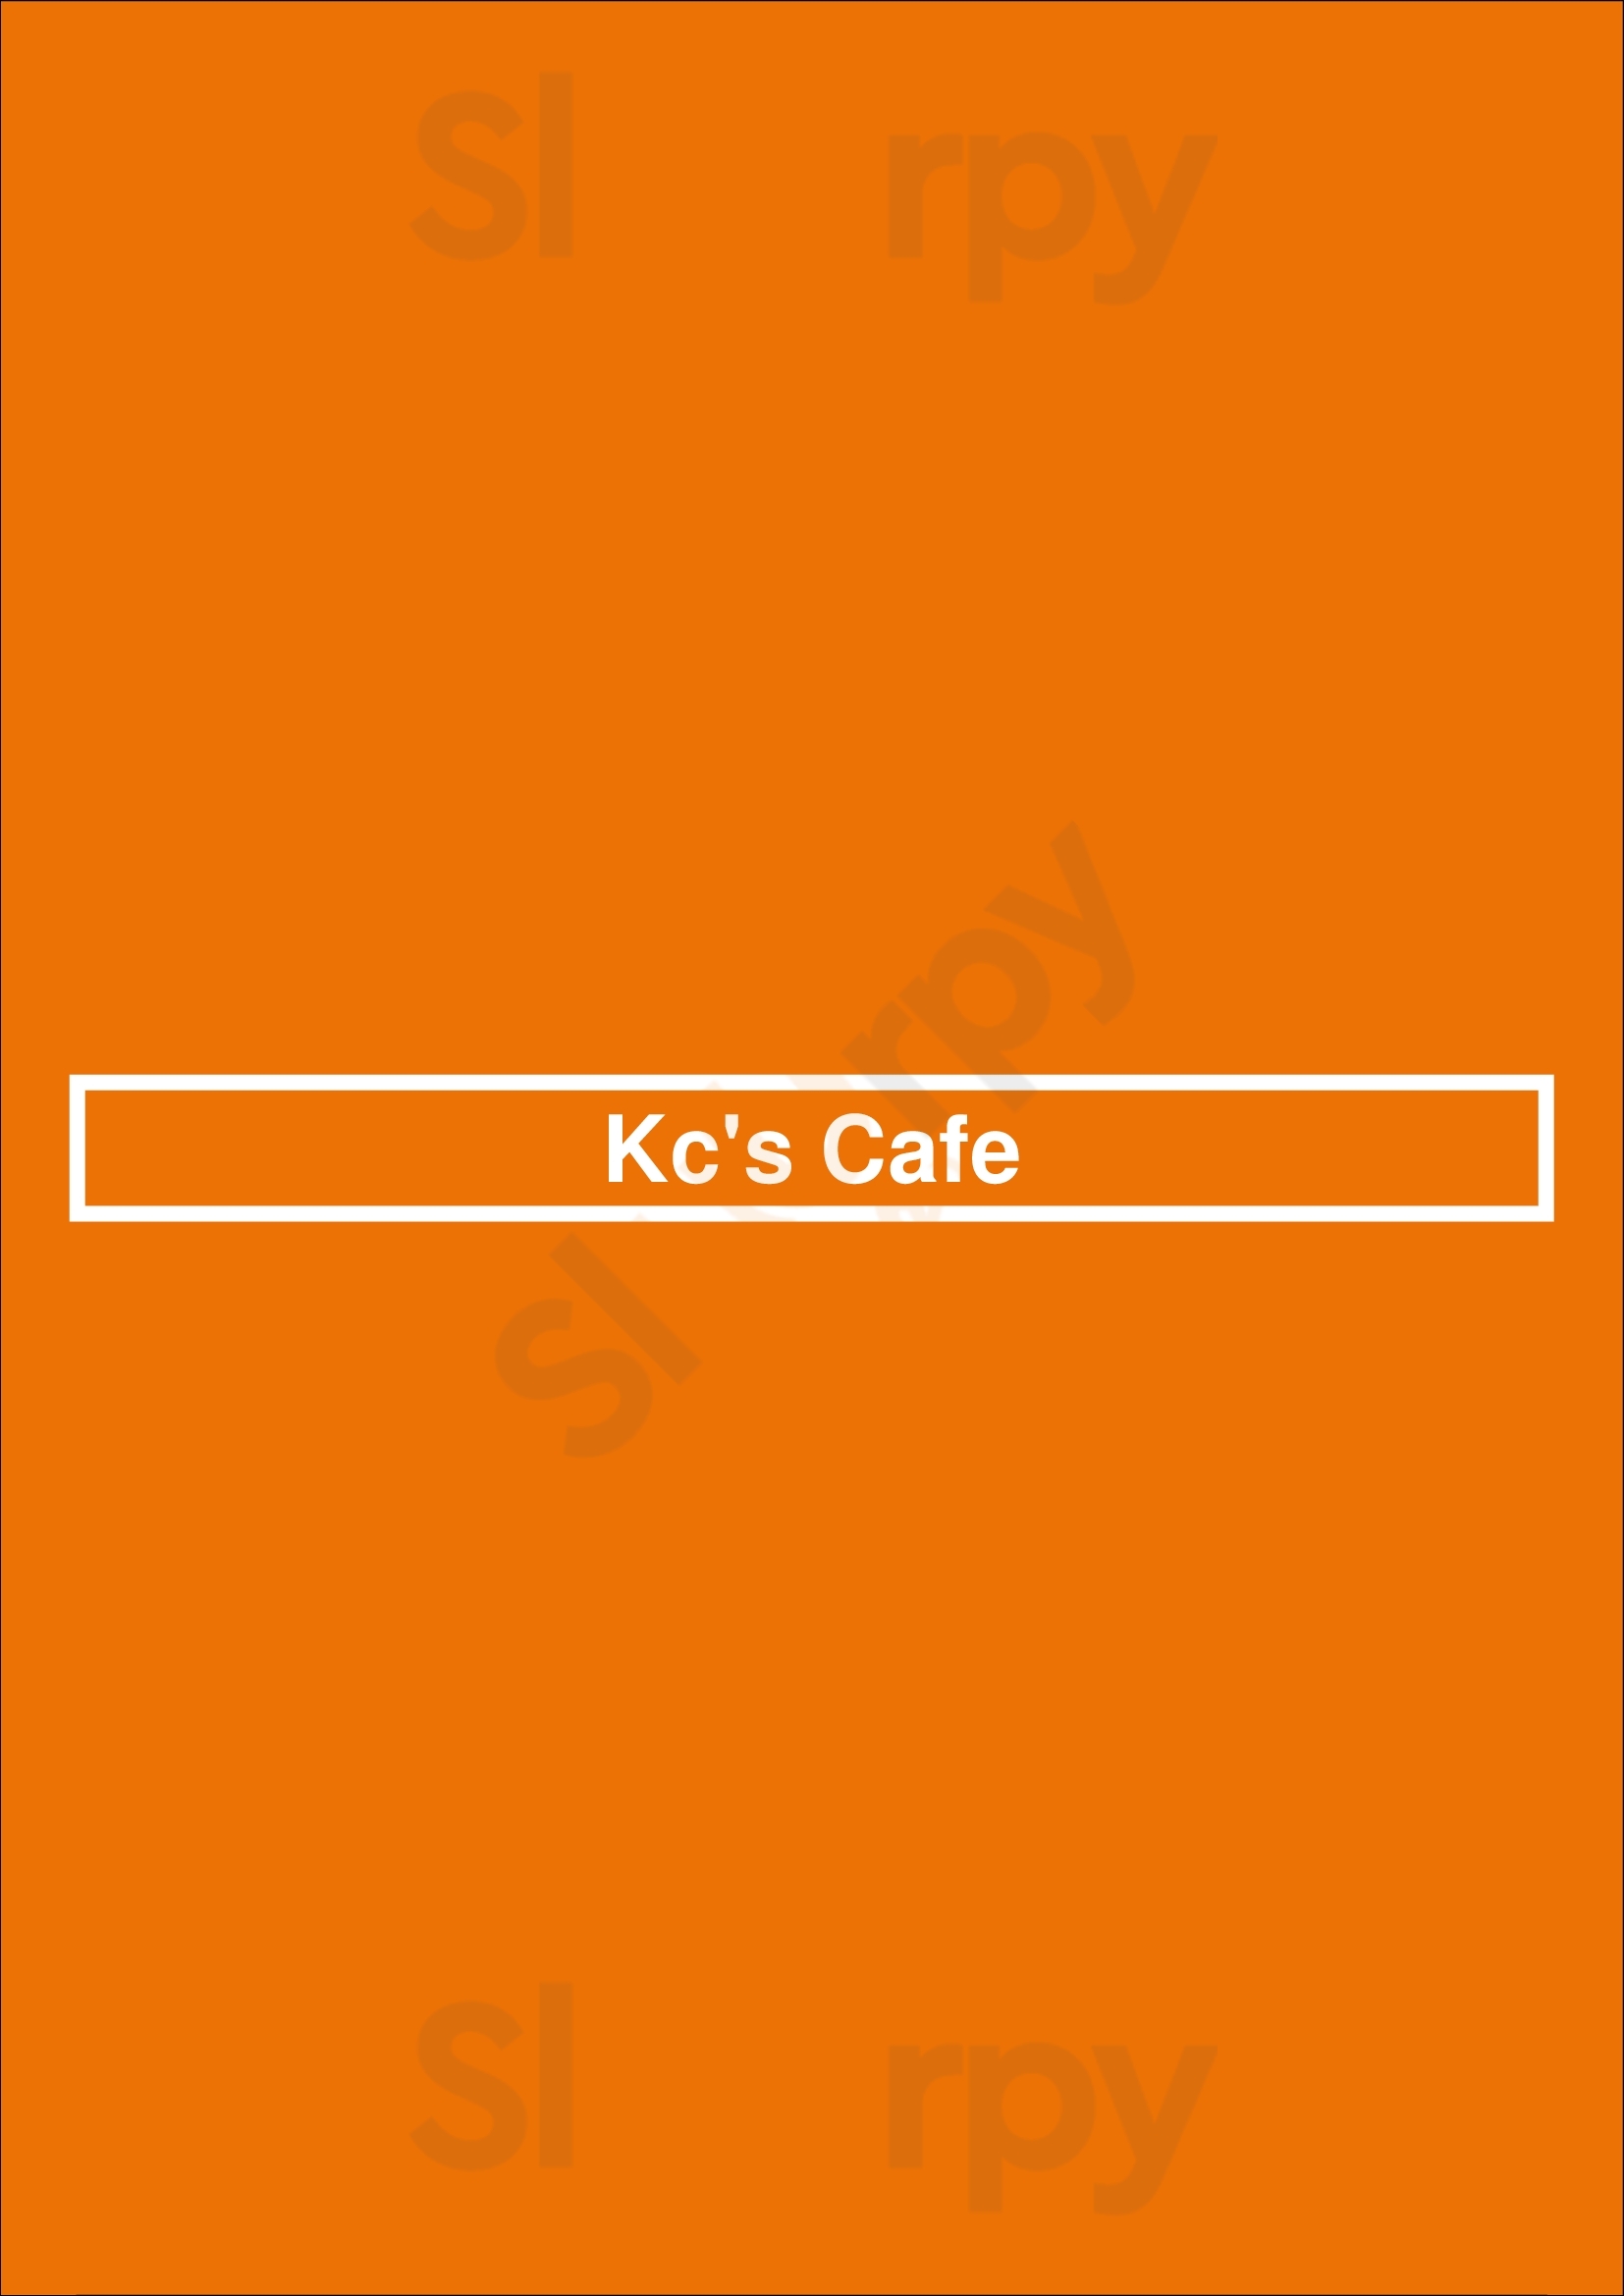 Kc's Crepes Cafe Los Angeles Menu - 1